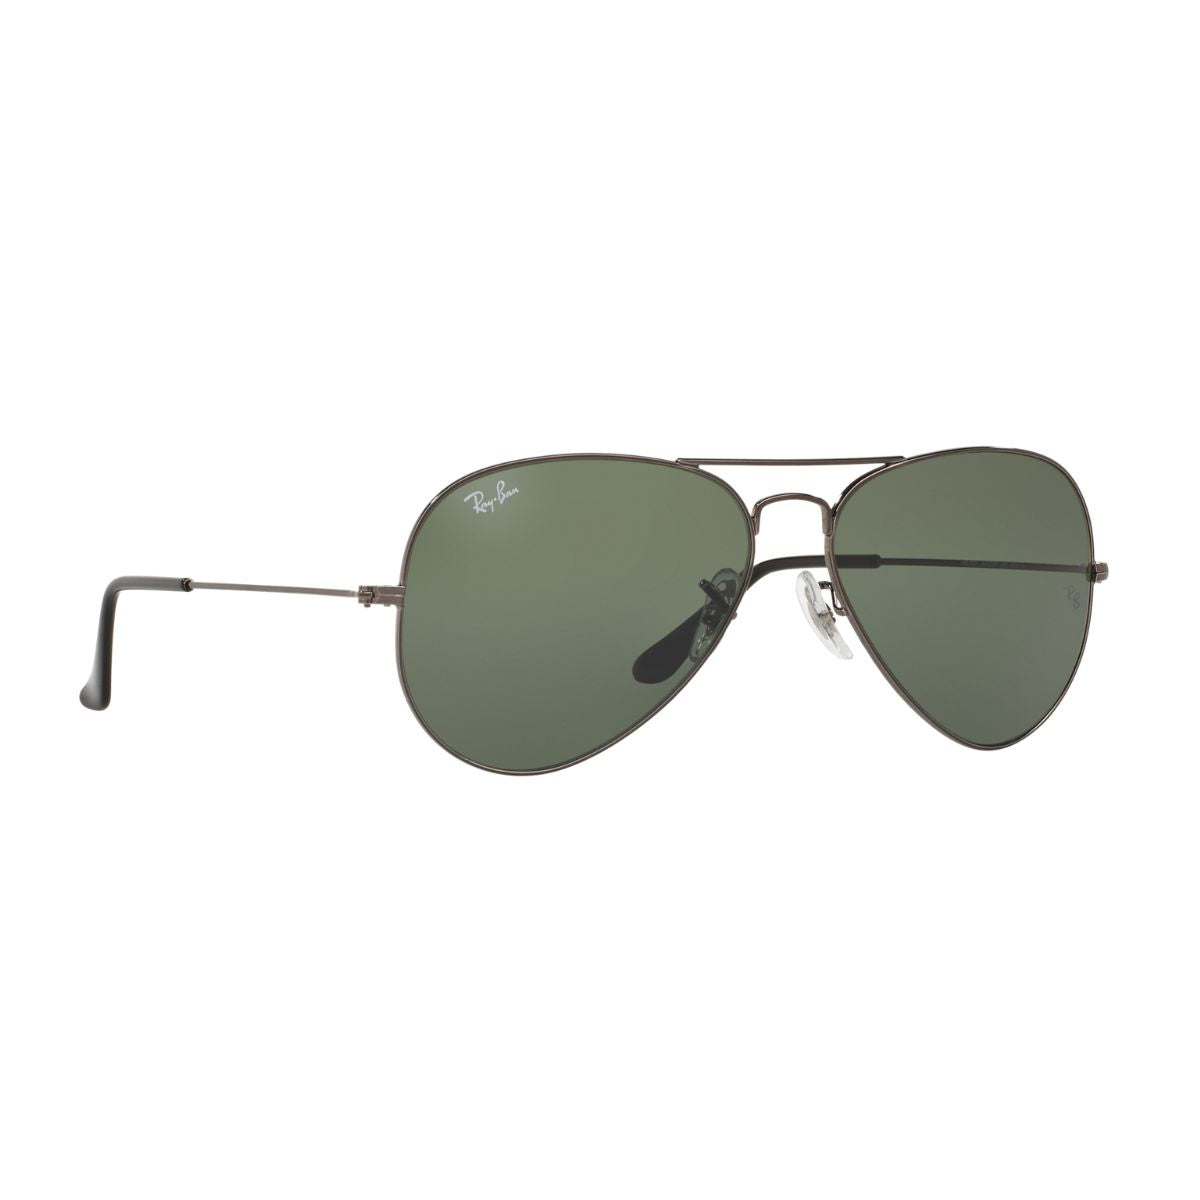 "Best Rayban 3025 004 Eyewear Sunglasses For Men's At Optorium"